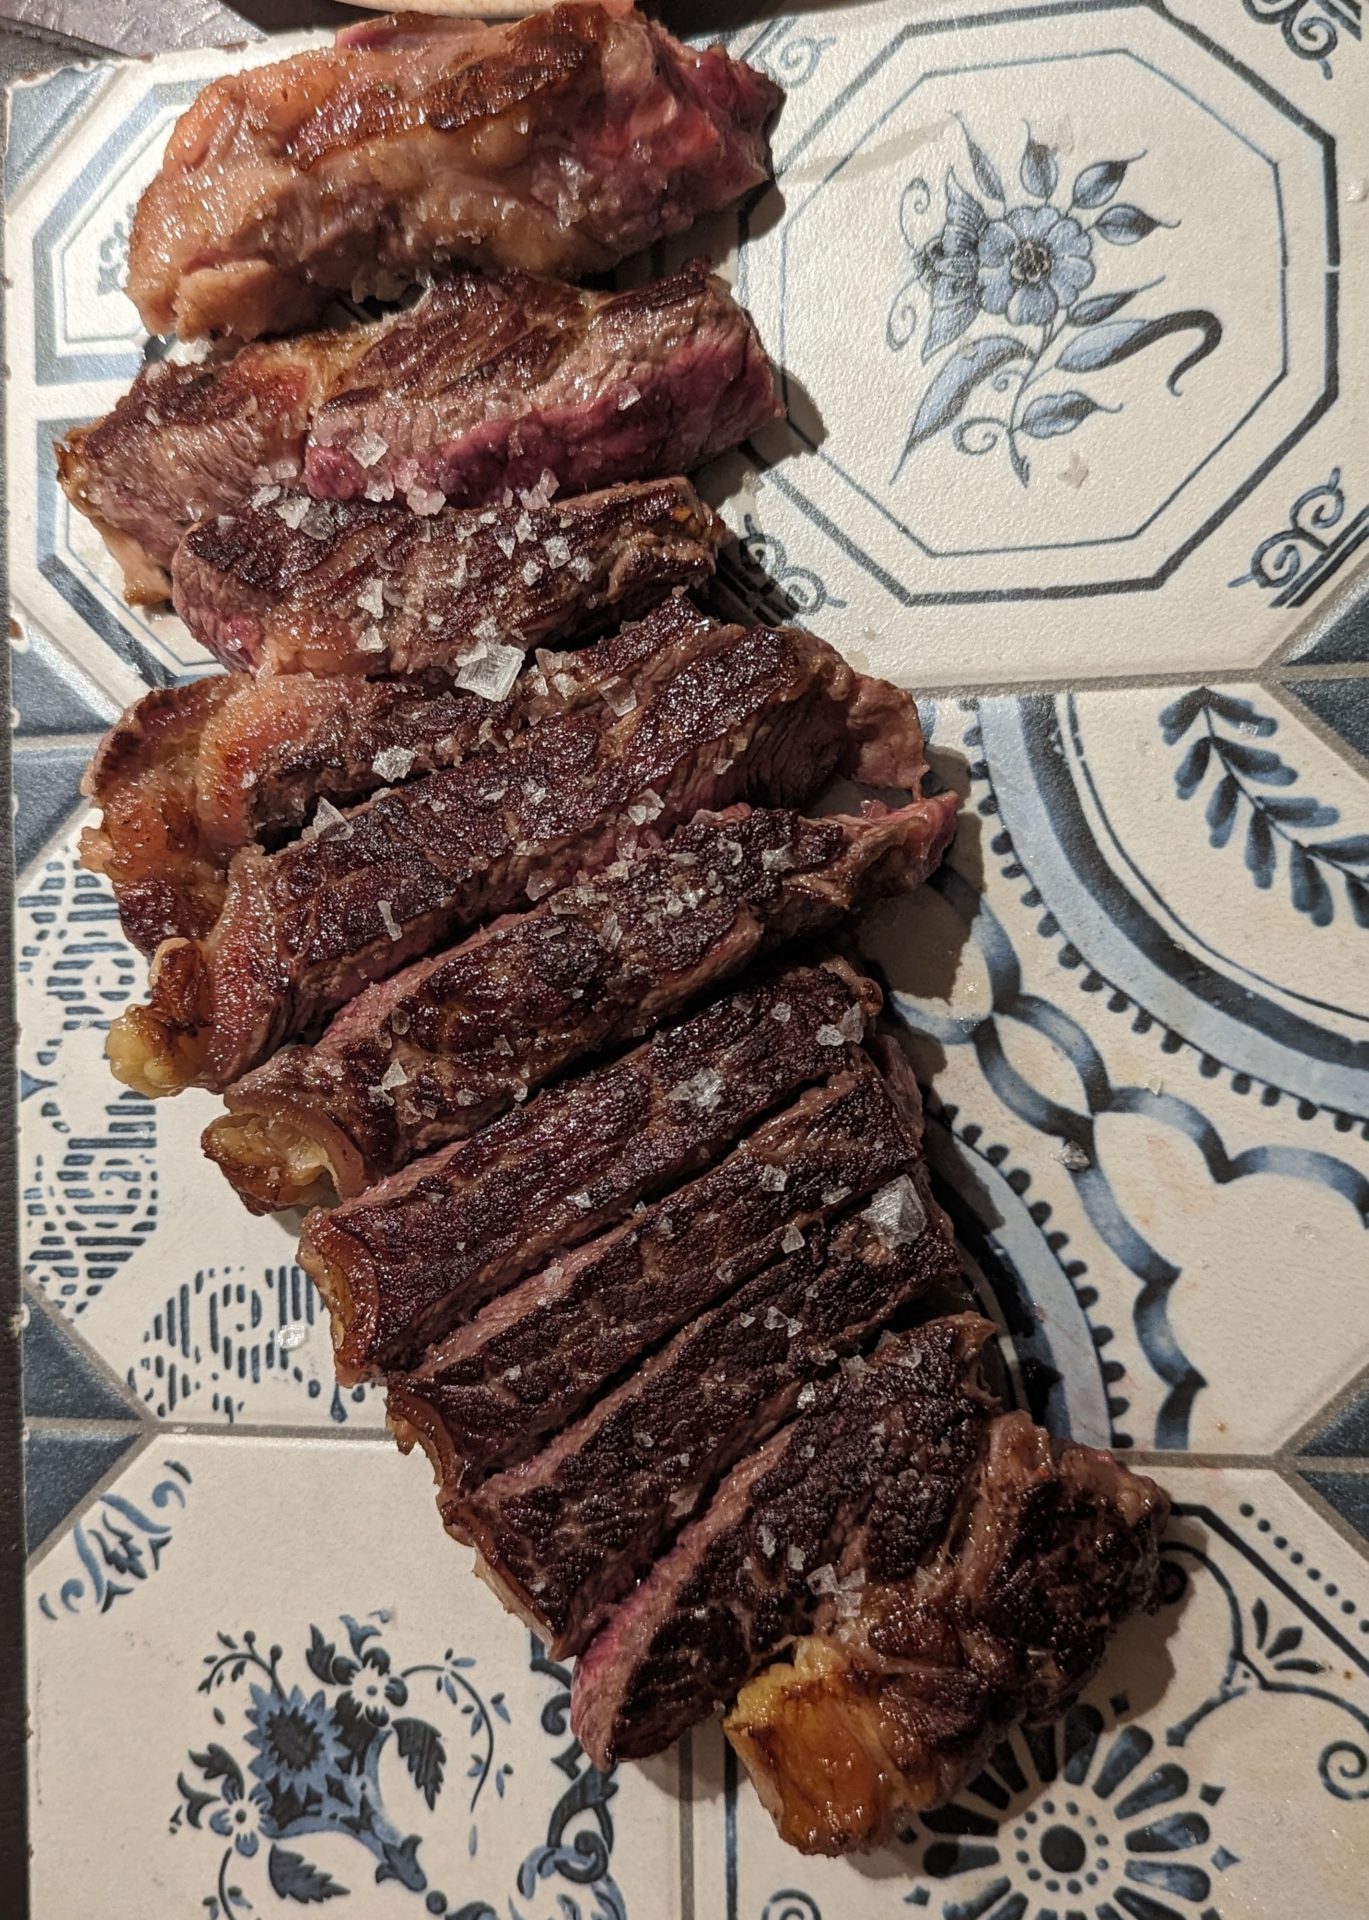 a sliced steak on a tile surface